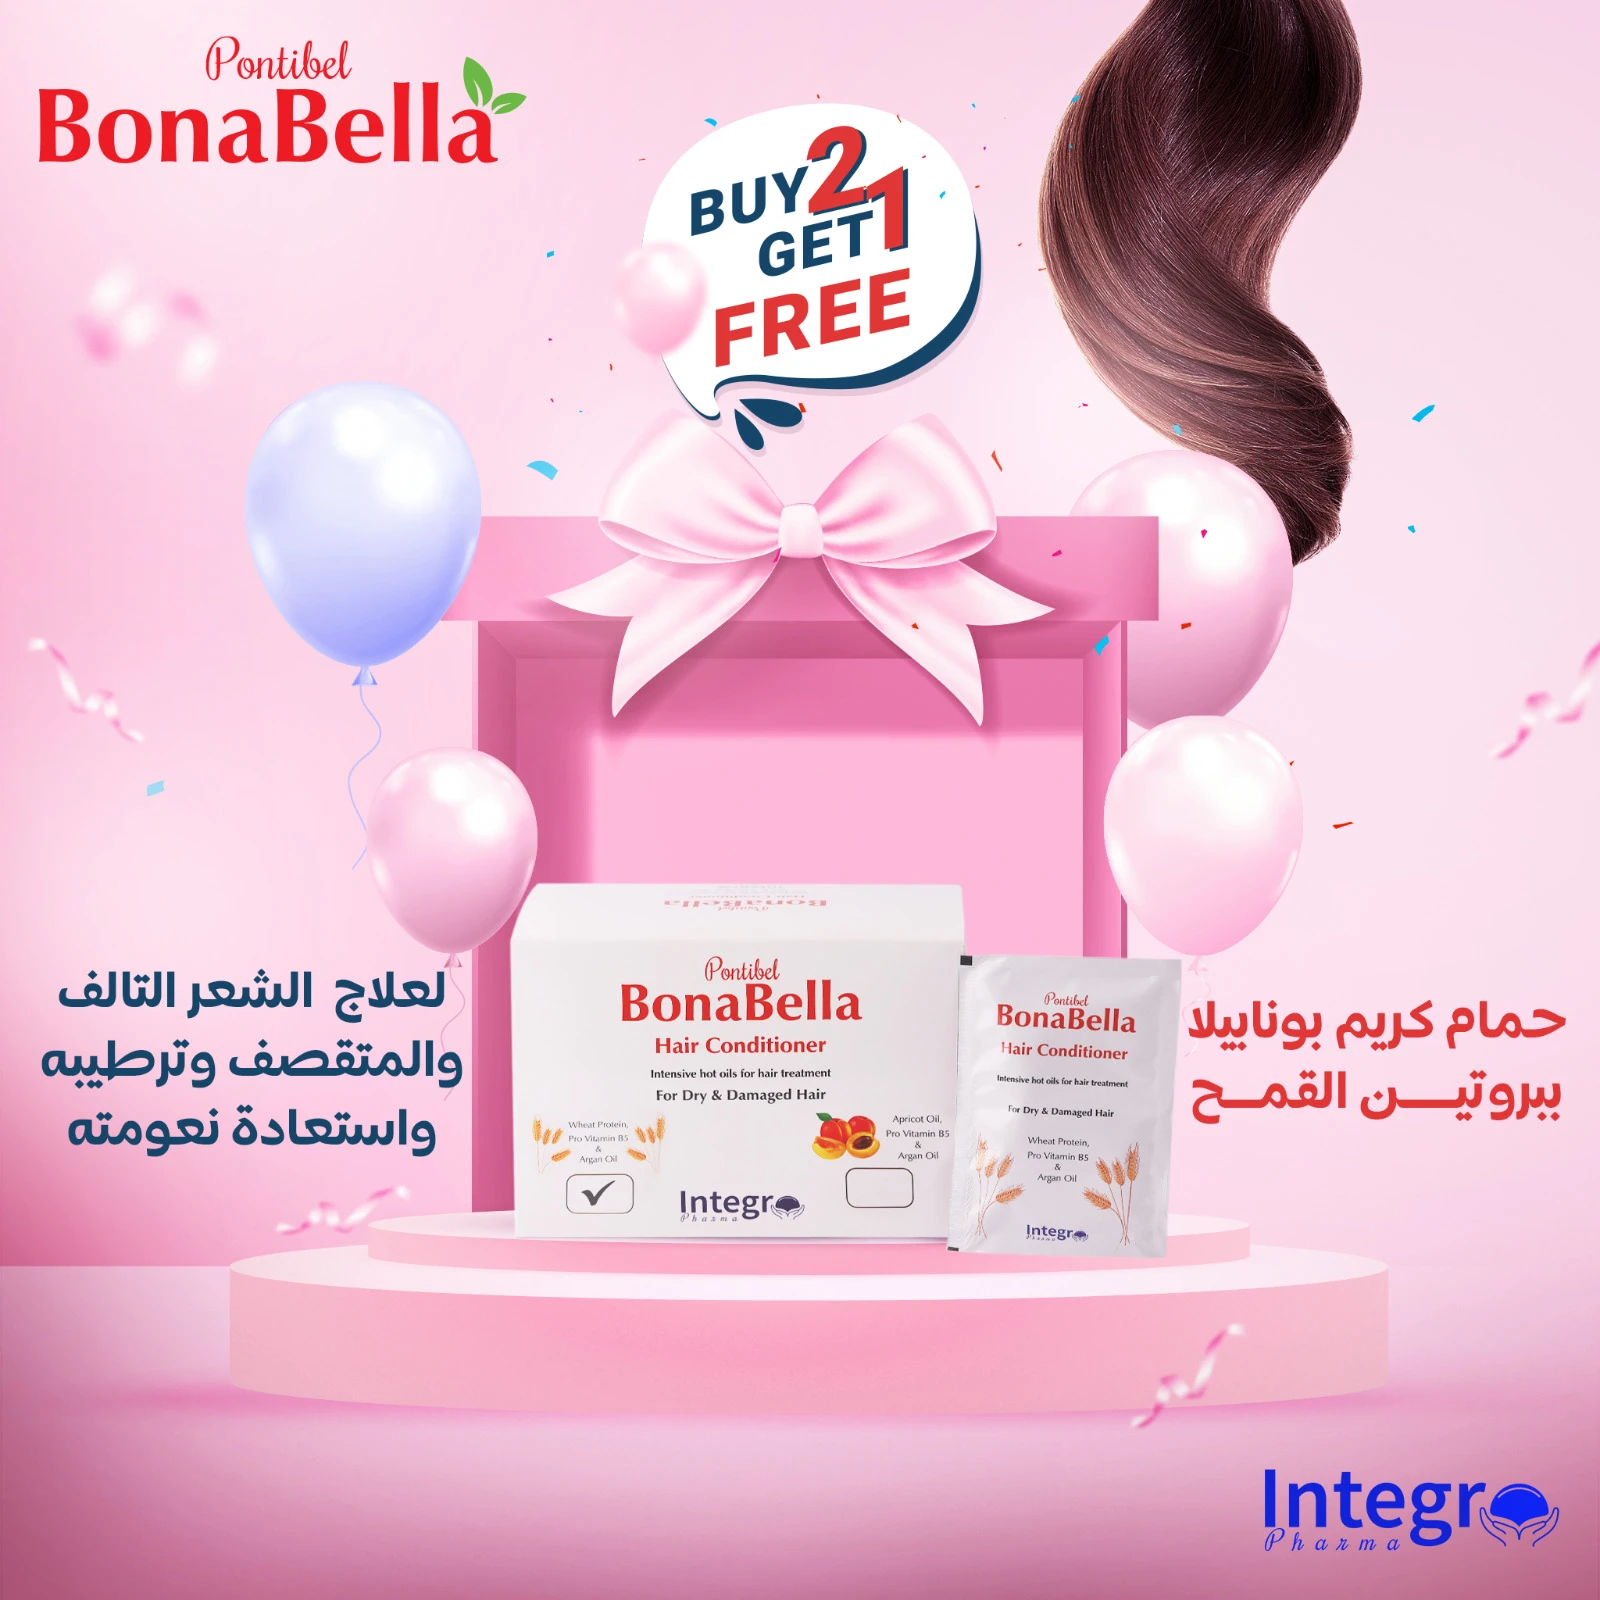 Buy 2 Get 1 free - BonaBella Wheat Protein Hair Conditioner Packet 24 Sachet